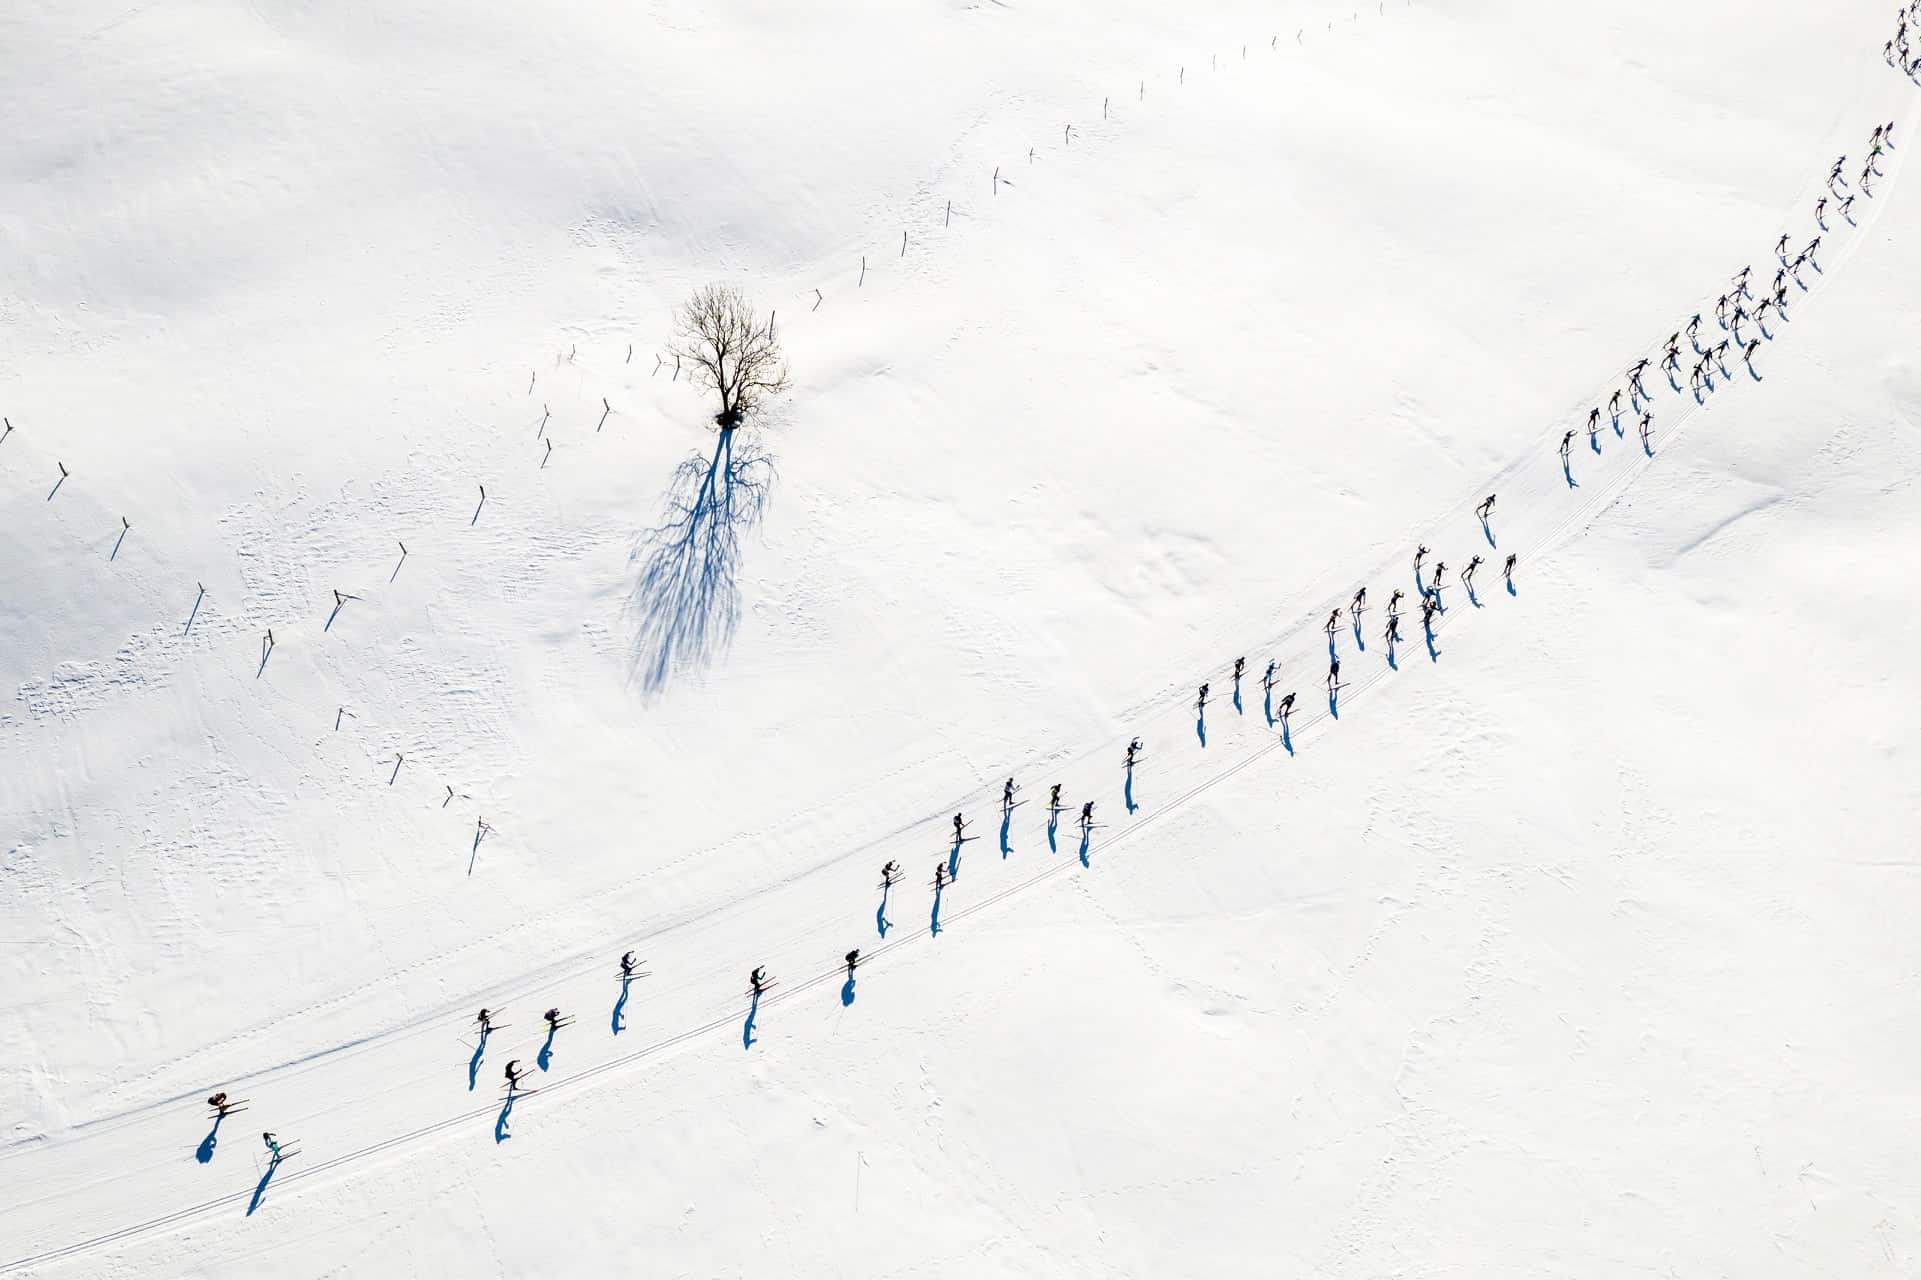 La Transju 2022 course de ski de fond en France avec de la neige